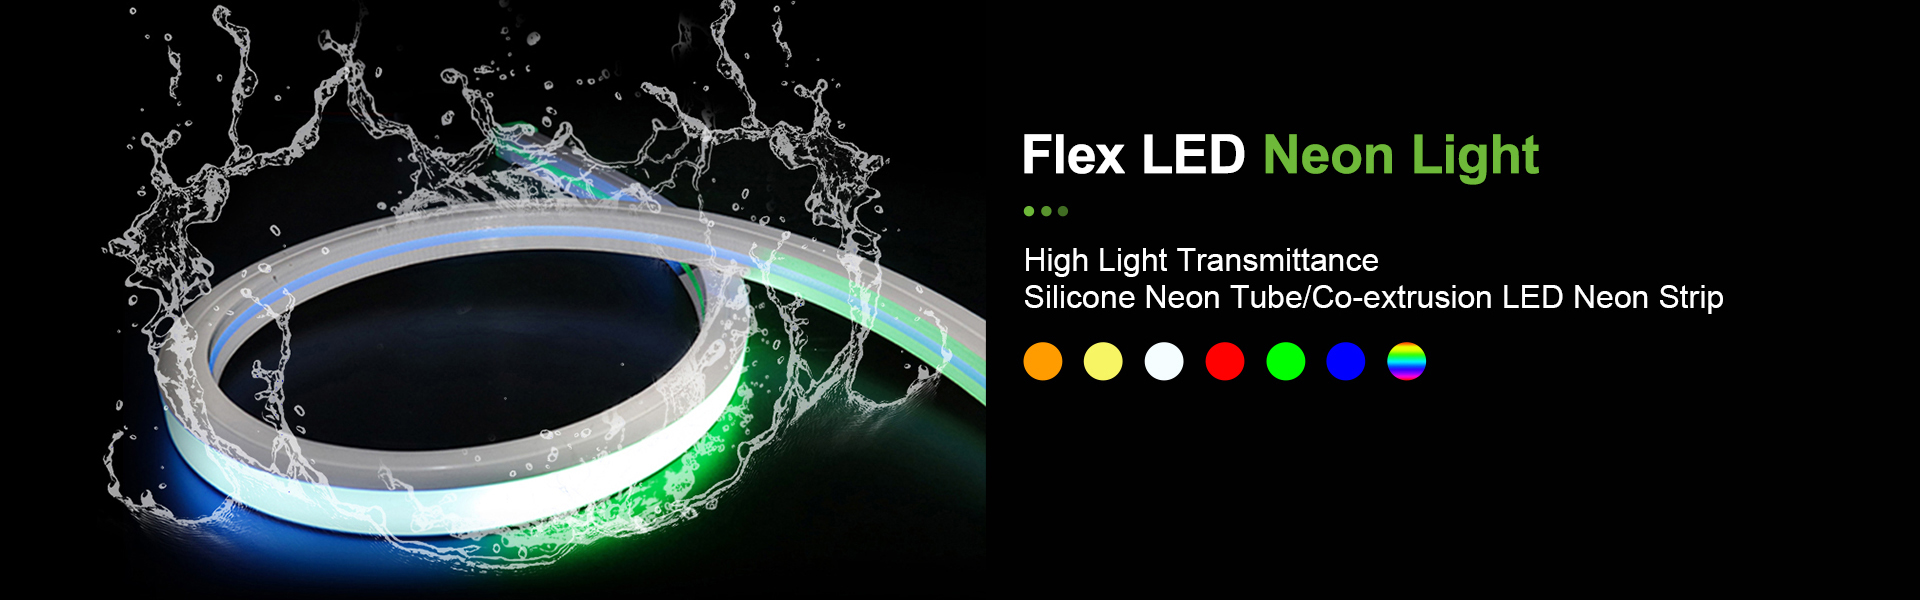 LED -kaistalevalaistus,neonvalo, cobnauhavalaistus,AWS (SZ) Technology Company Limited